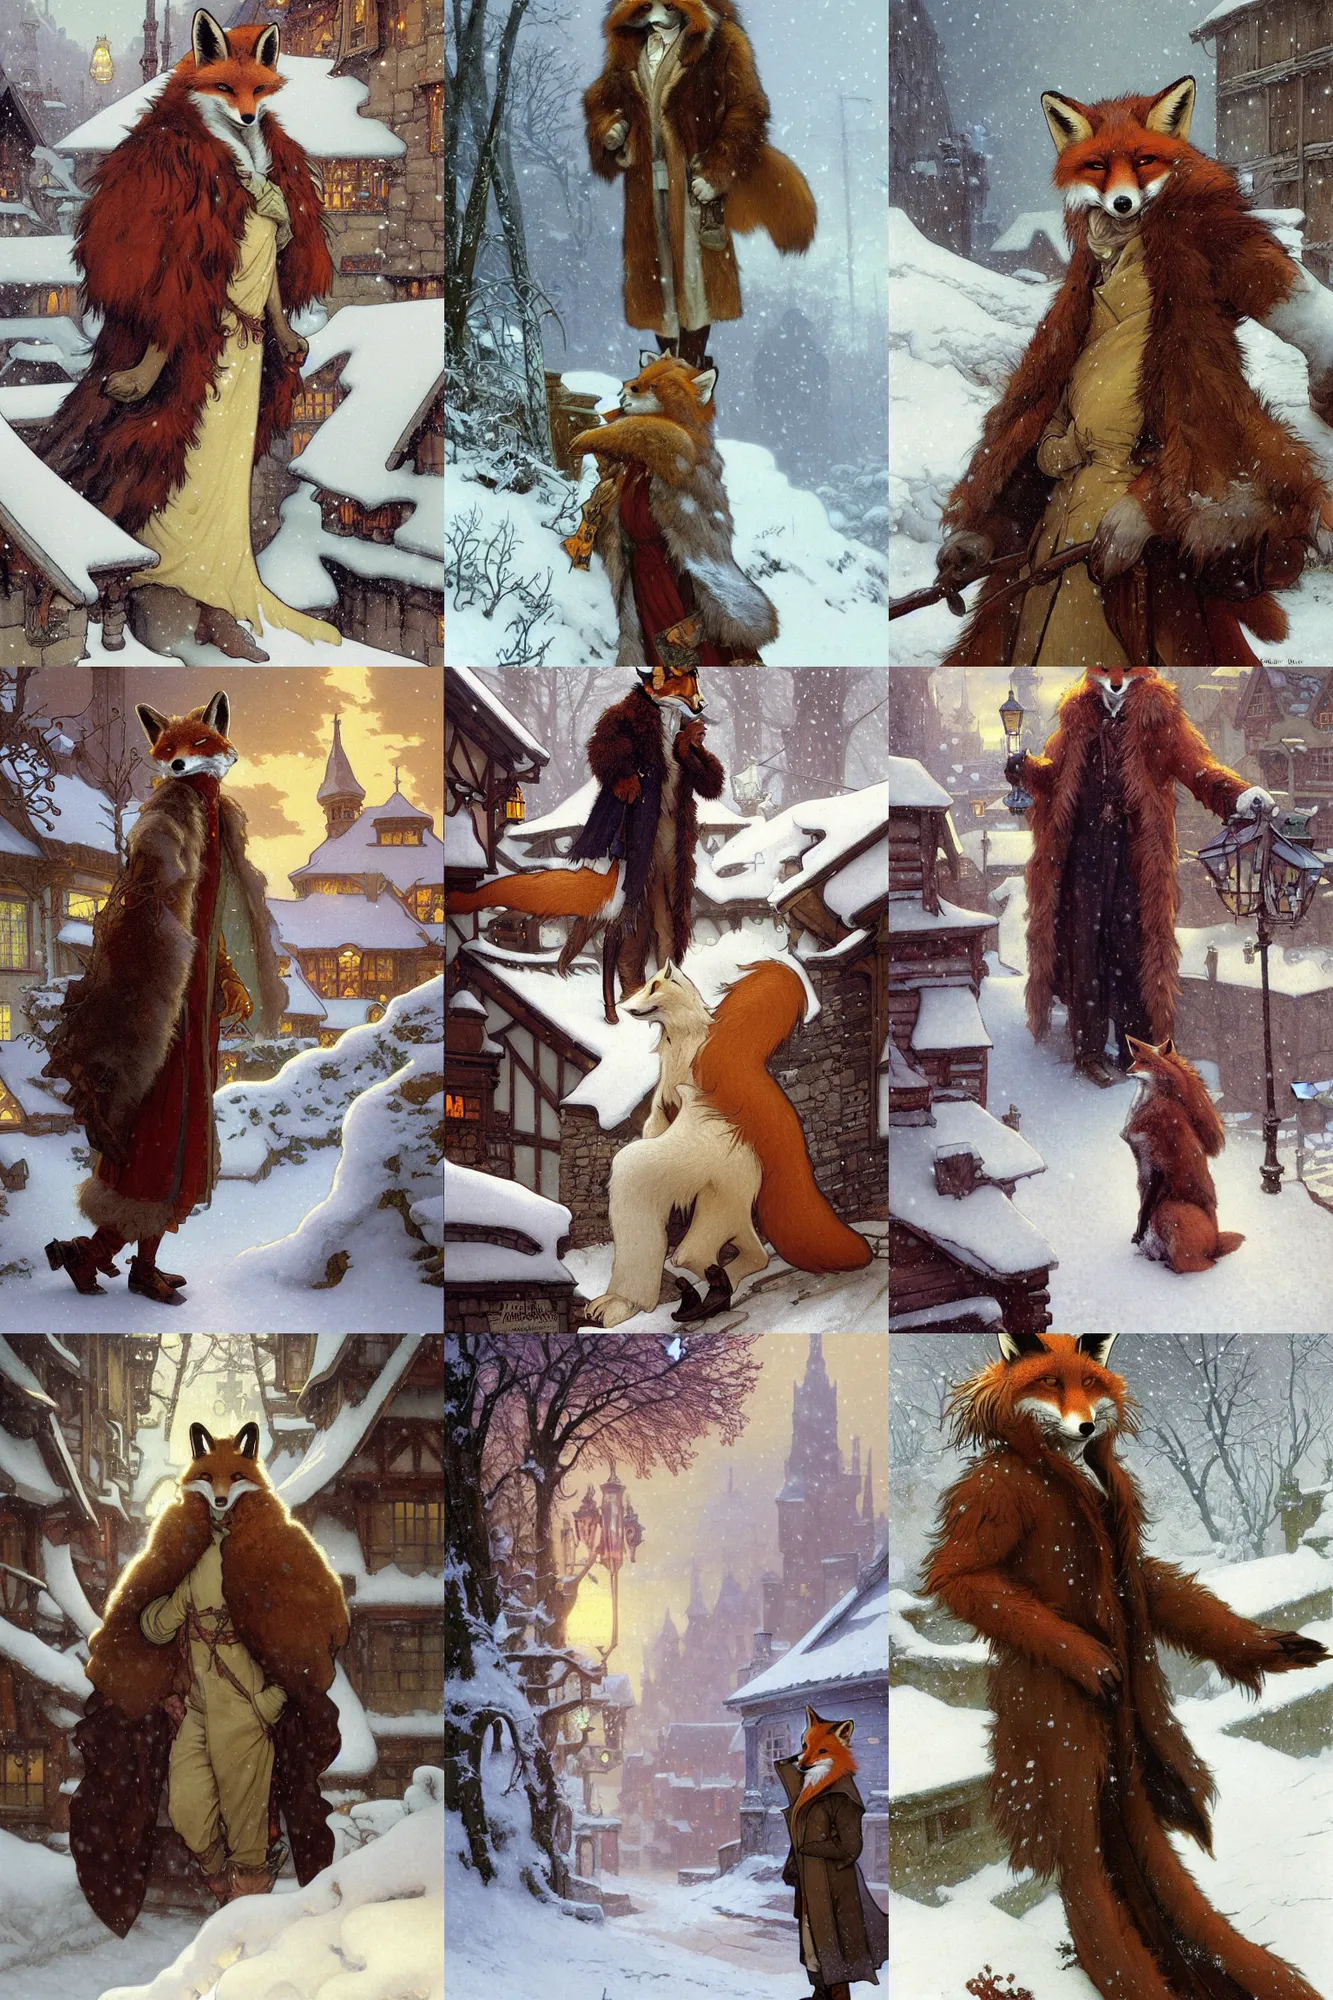 Prompt: an anthropomorphic fox man wearing a long fur coat in a snowy village, character illustration by greg rutkowski, thomas kinkade, alphonse mucha, Gil Elvgren